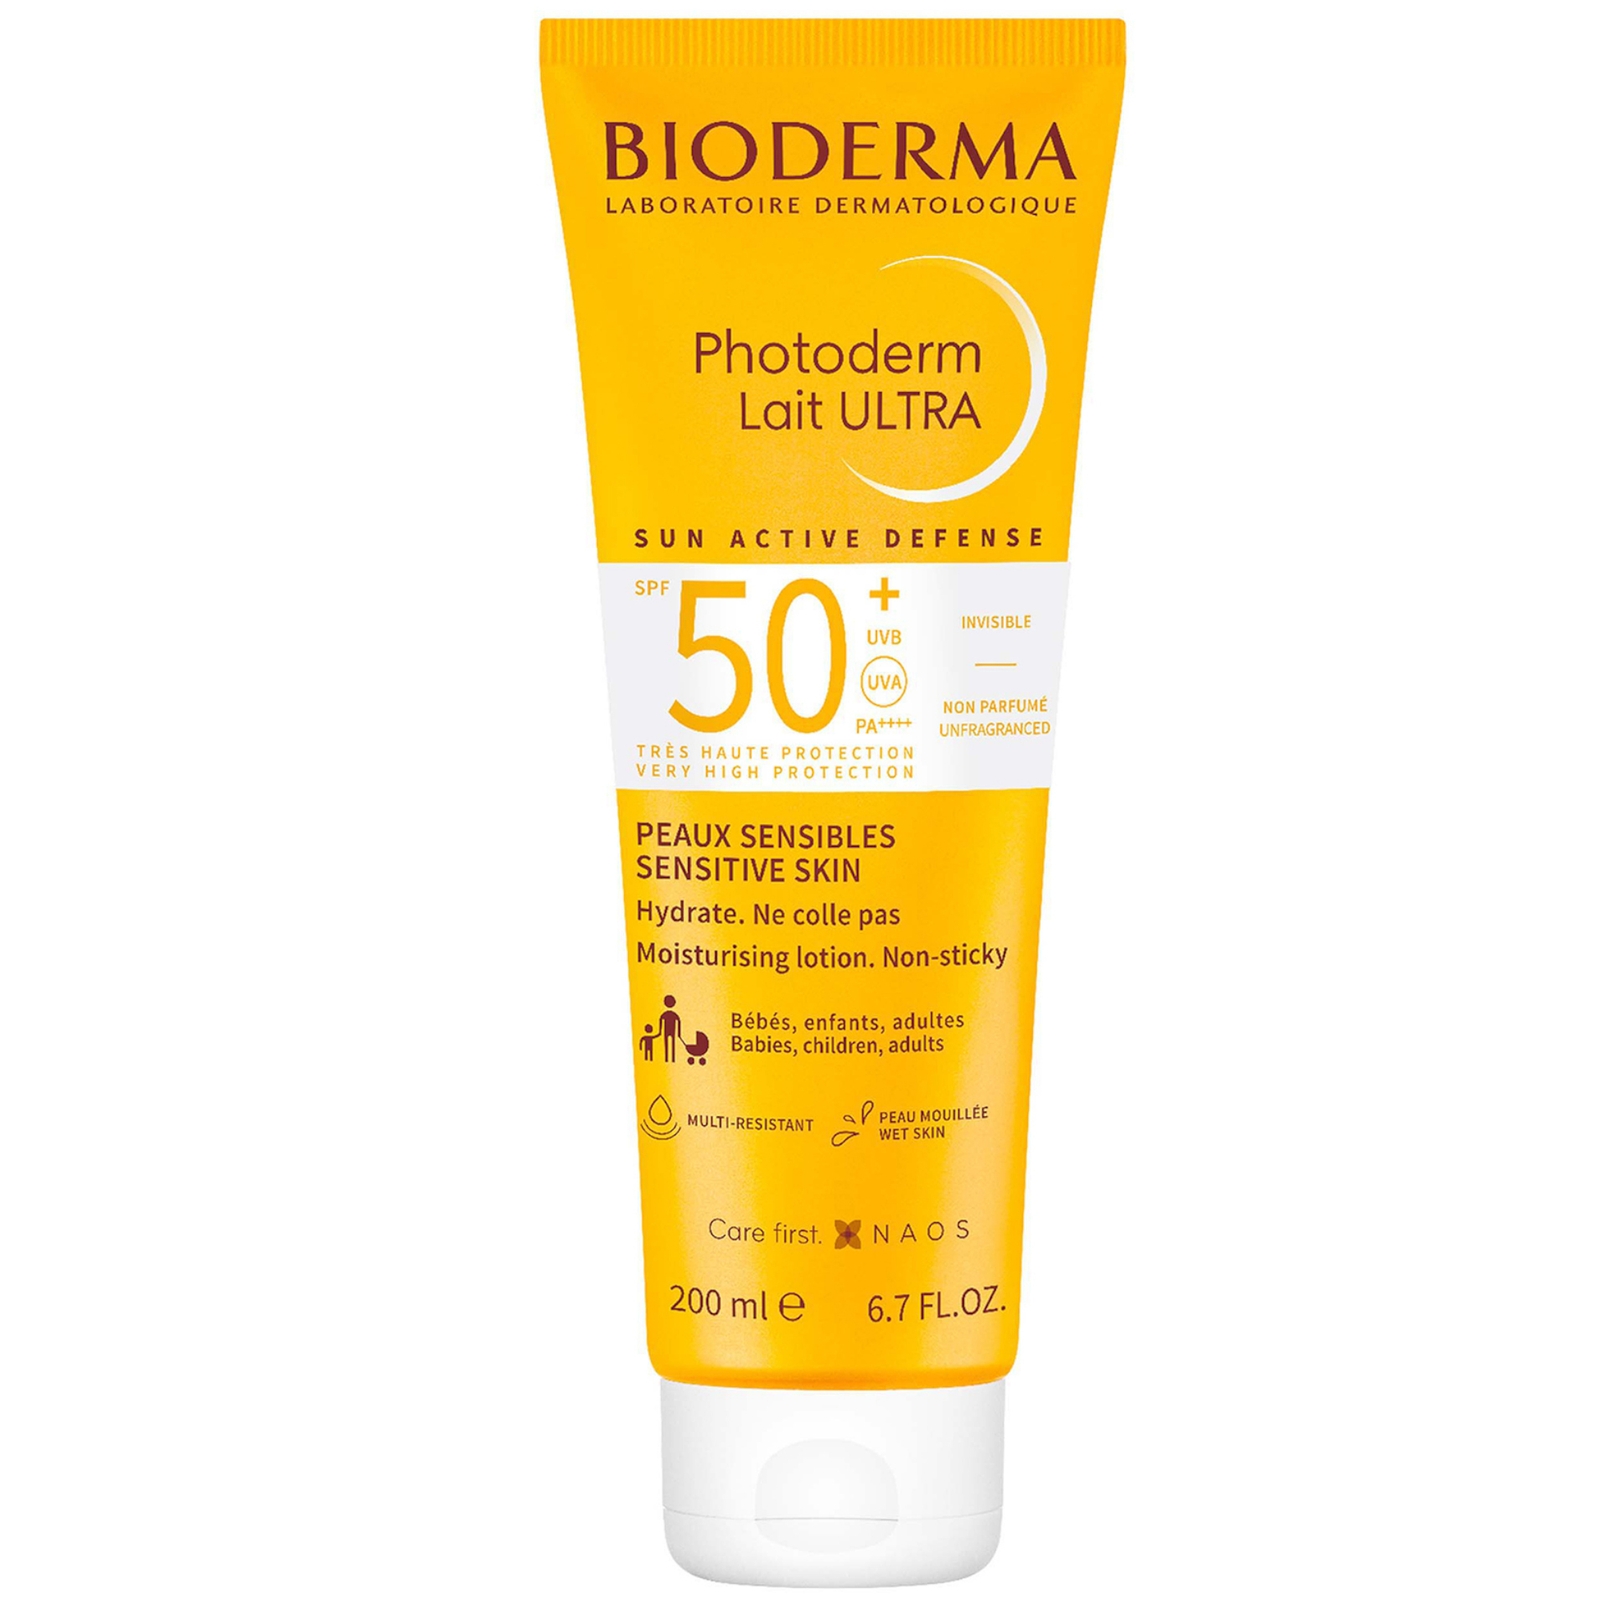 Photos - Sun Skin Care Bioderma Photoderm Lait Ultra SPF50+ Very High Protection Sunscreen 200ml 